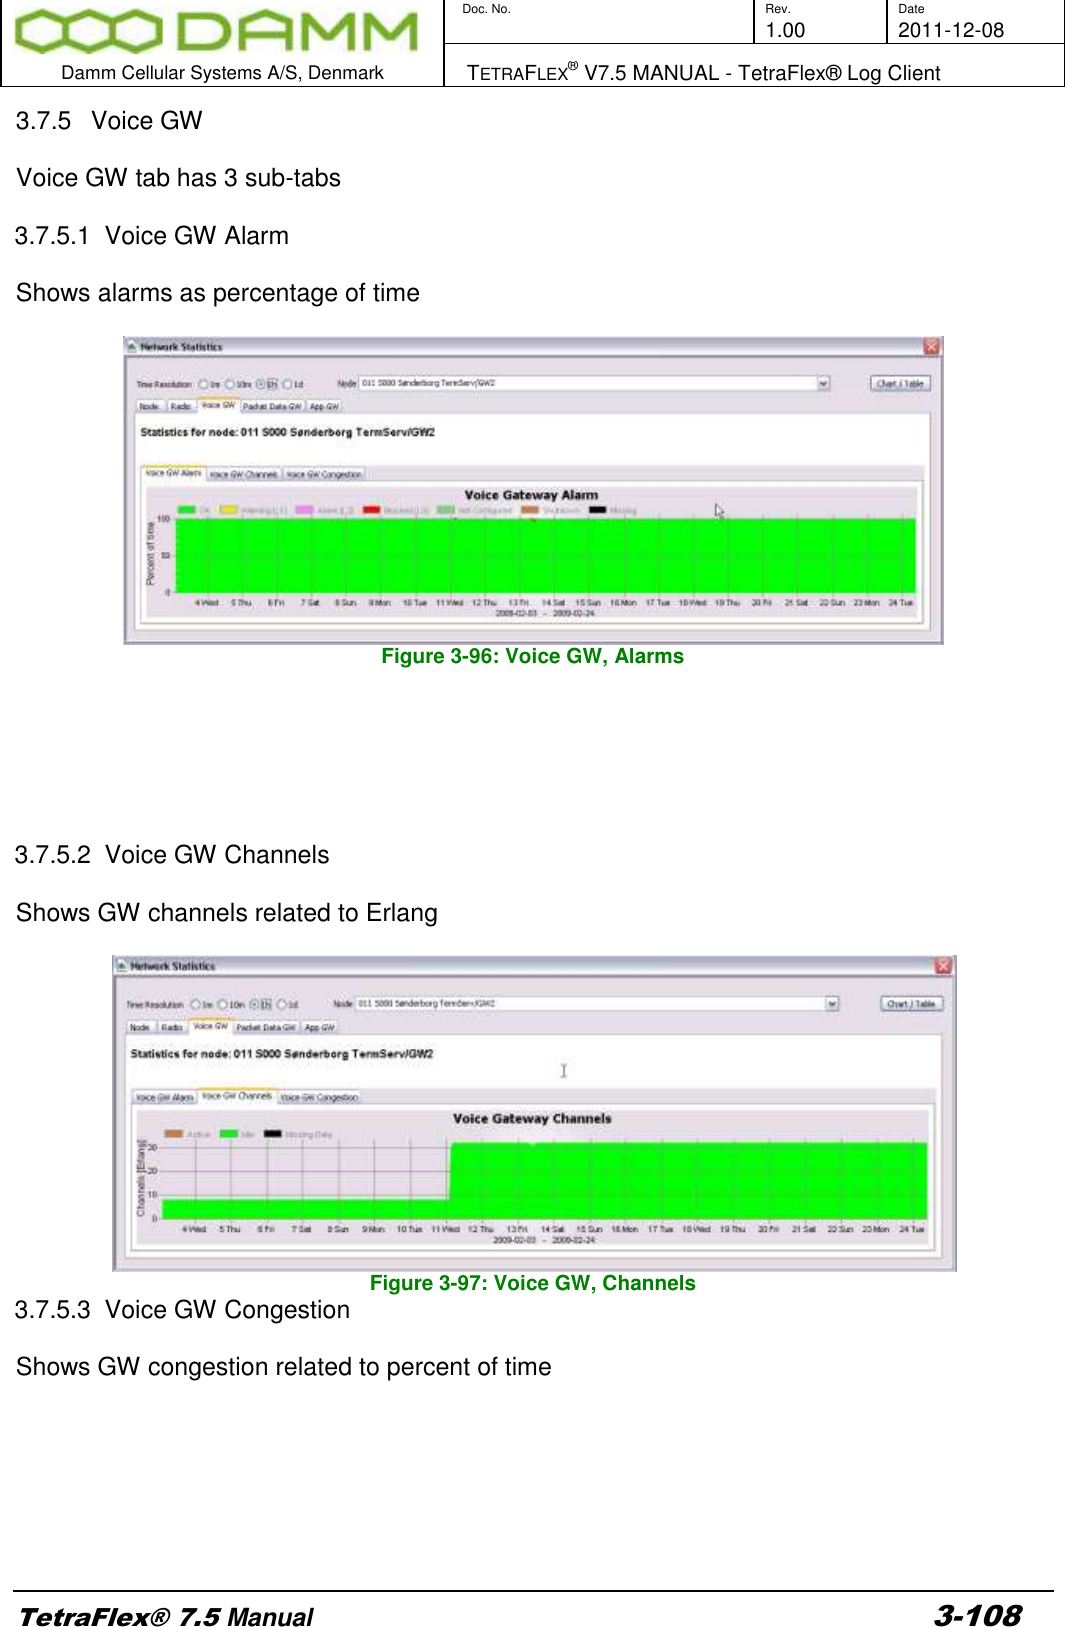        Doc. No. Rev. Date     1.00 2011-12-08  Damm Cellular Systems A/S, Denmark   TETRAFLEX® V7.5 MANUAL - TetraFlex® Log Client  TetraFlex® 7.5 Manual 3-108 3.7.5  Voice GW  Voice GW tab has 3 sub-tabs  3.7.5.1  Voice GW Alarm  Shows alarms as percentage of time   Figure 3-96: Voice GW, Alarms       3.7.5.2  Voice GW Channels  Shows GW channels related to Erlang   Figure 3-97: Voice GW, Channels 3.7.5.3  Voice GW Congestion  Shows GW congestion related to percent of time  